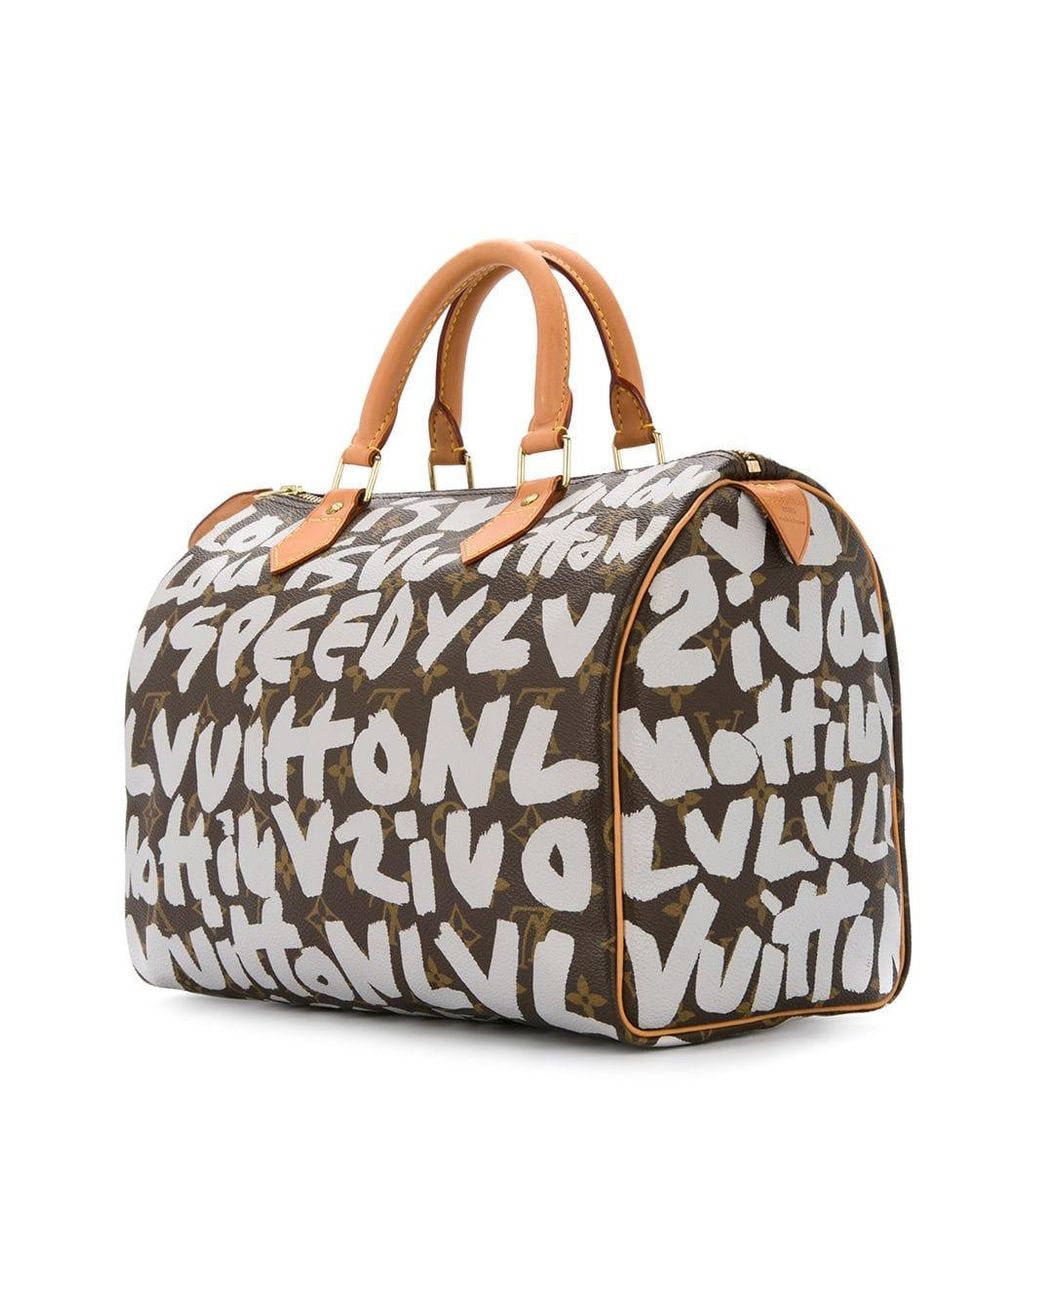 Louis Vuitton 2018-2019 pre-owned Graffiti Speedy 30 Handbag - Farfetch